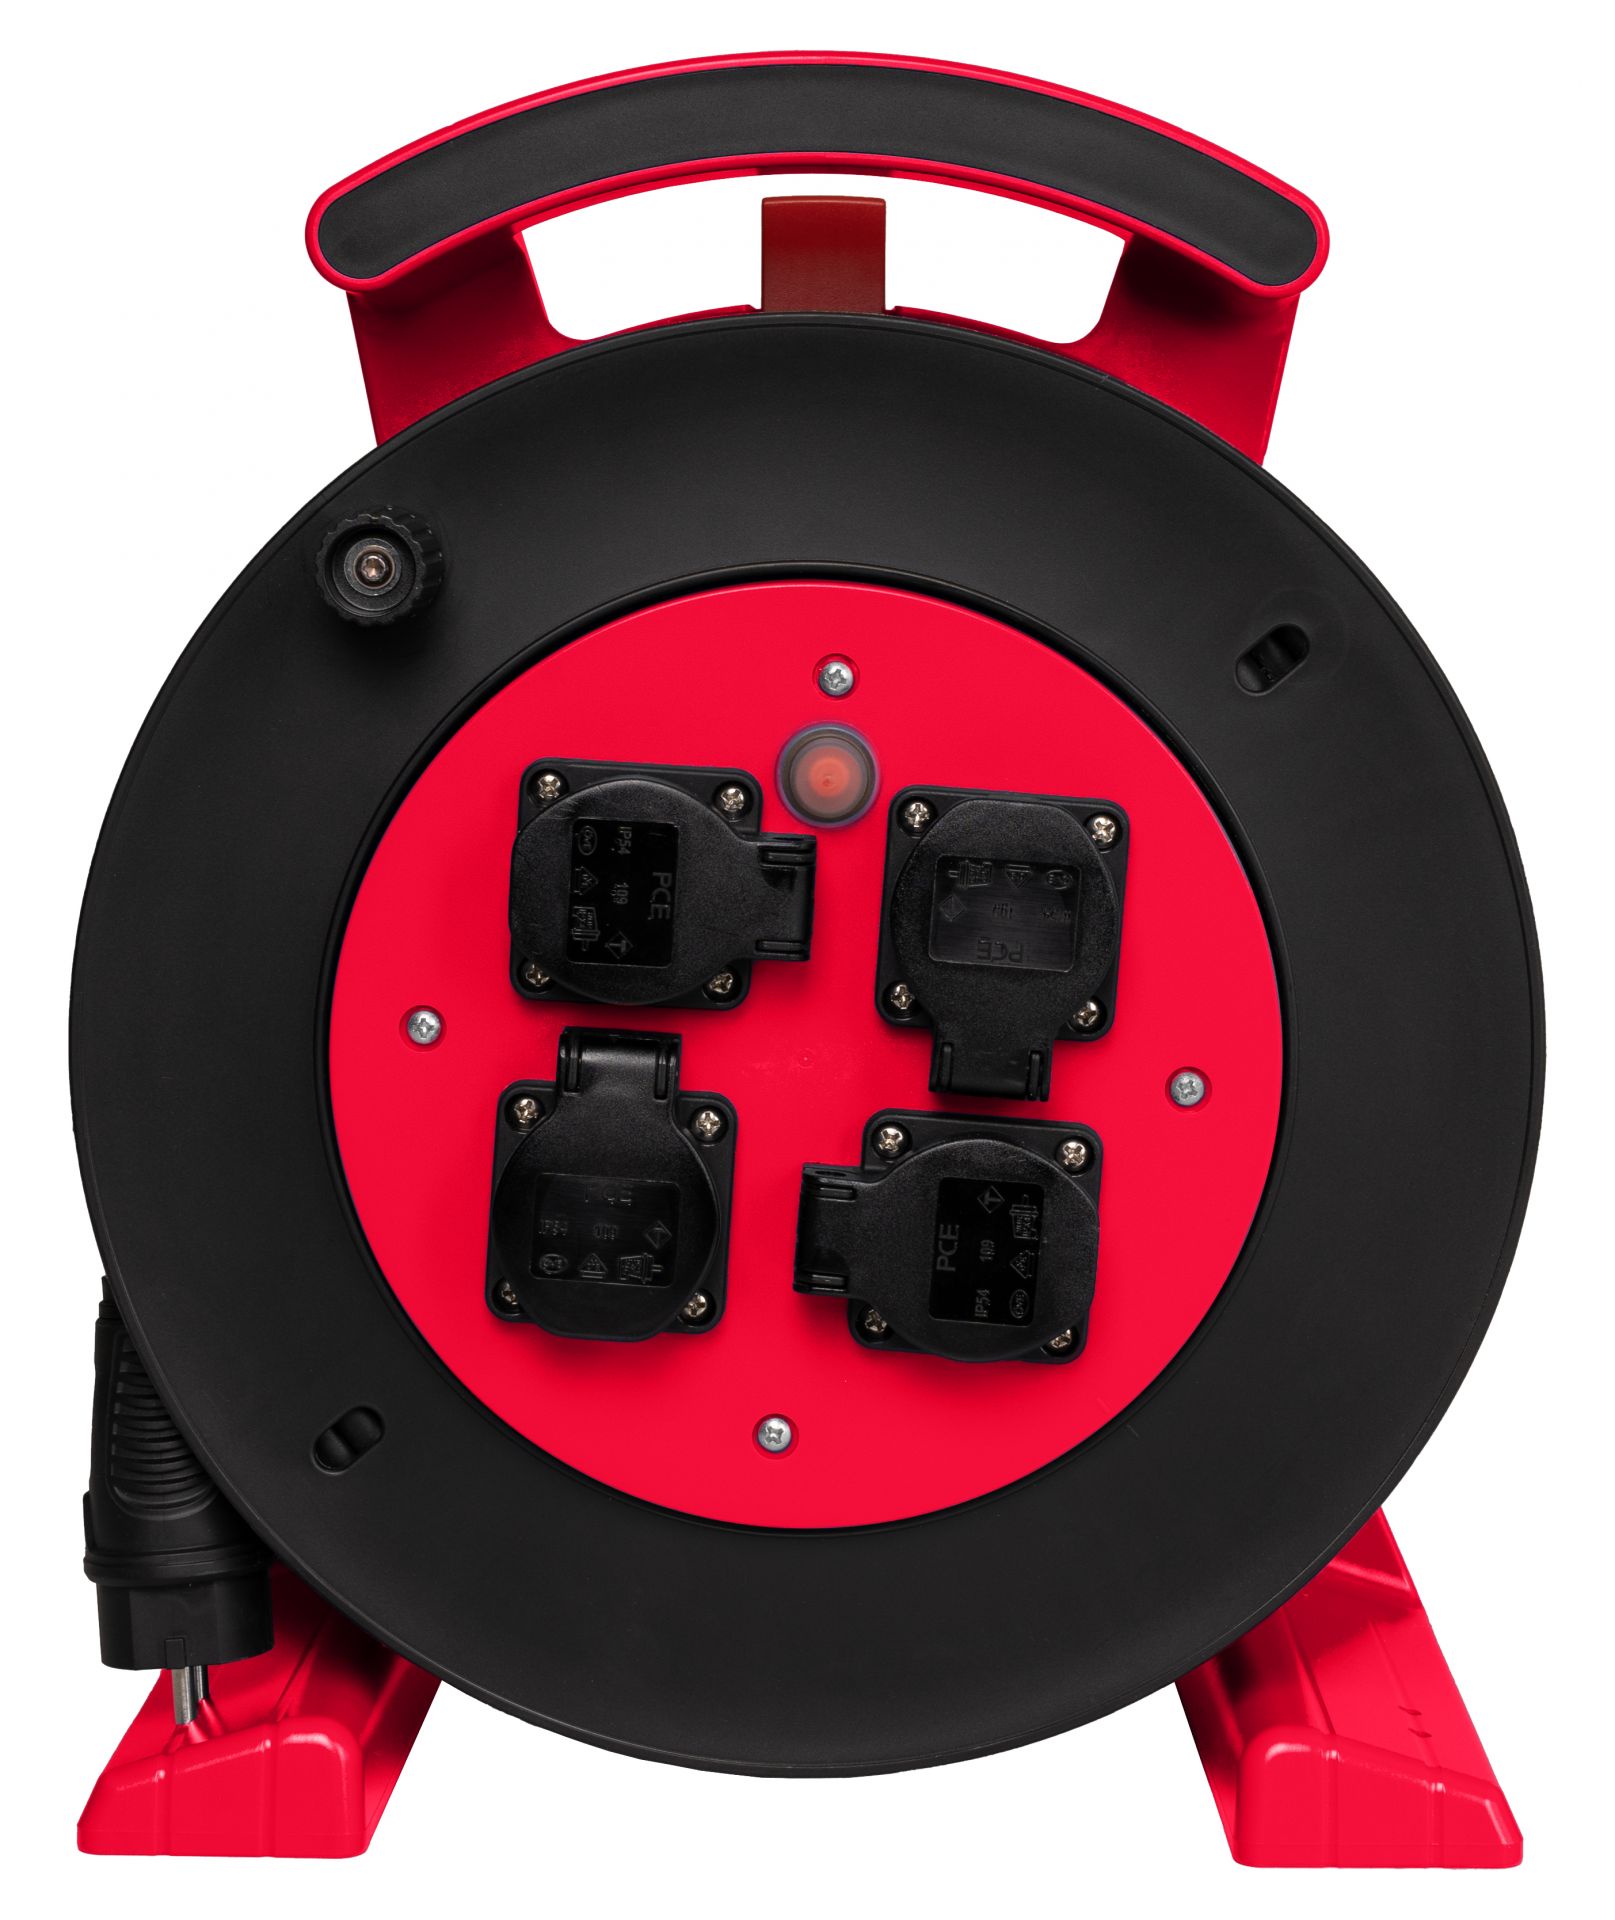 Kabeltrommel rot-schwarz, 4 x Schutzkontakt-Steckdose, H07RN-F 3 G 2,5 mm², 25 m JUMBO L 2.0